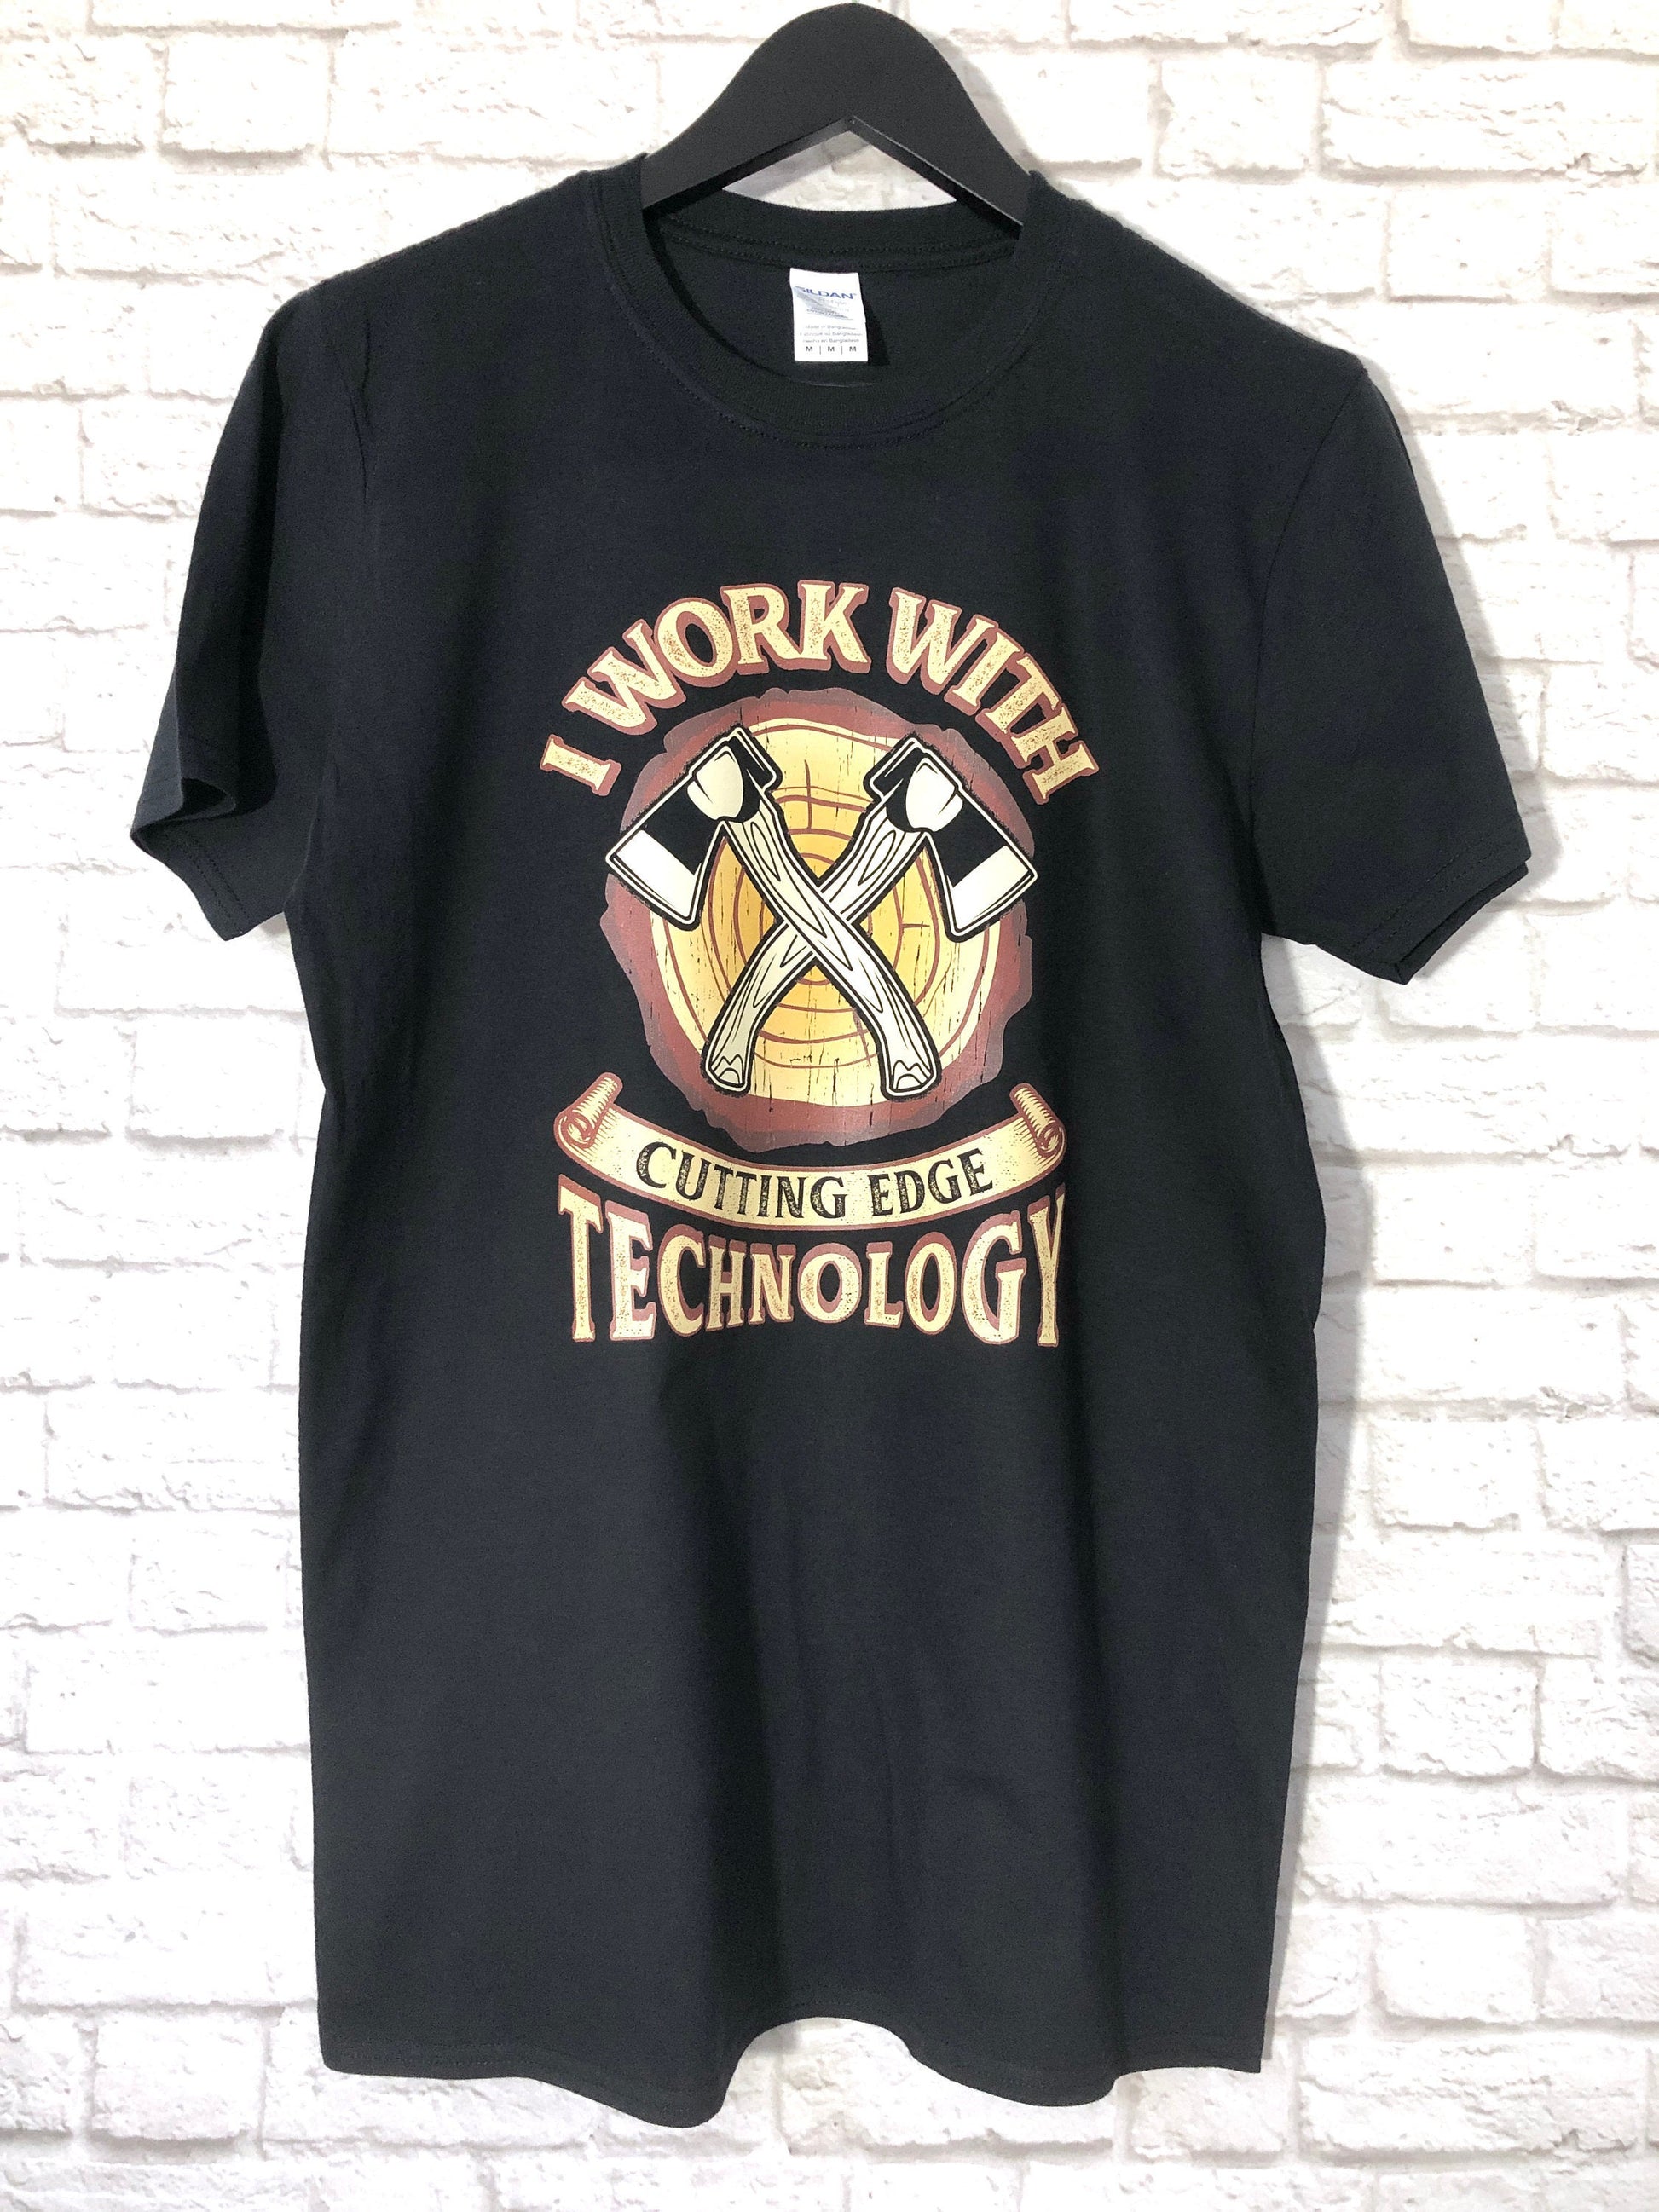 Funny Lumberjack Woodwork T-Shirt, I Work With Cutting Edge Technology Pun Gift Idea, Humorous Arborist Axes Graphic Print Tee Shirt Top